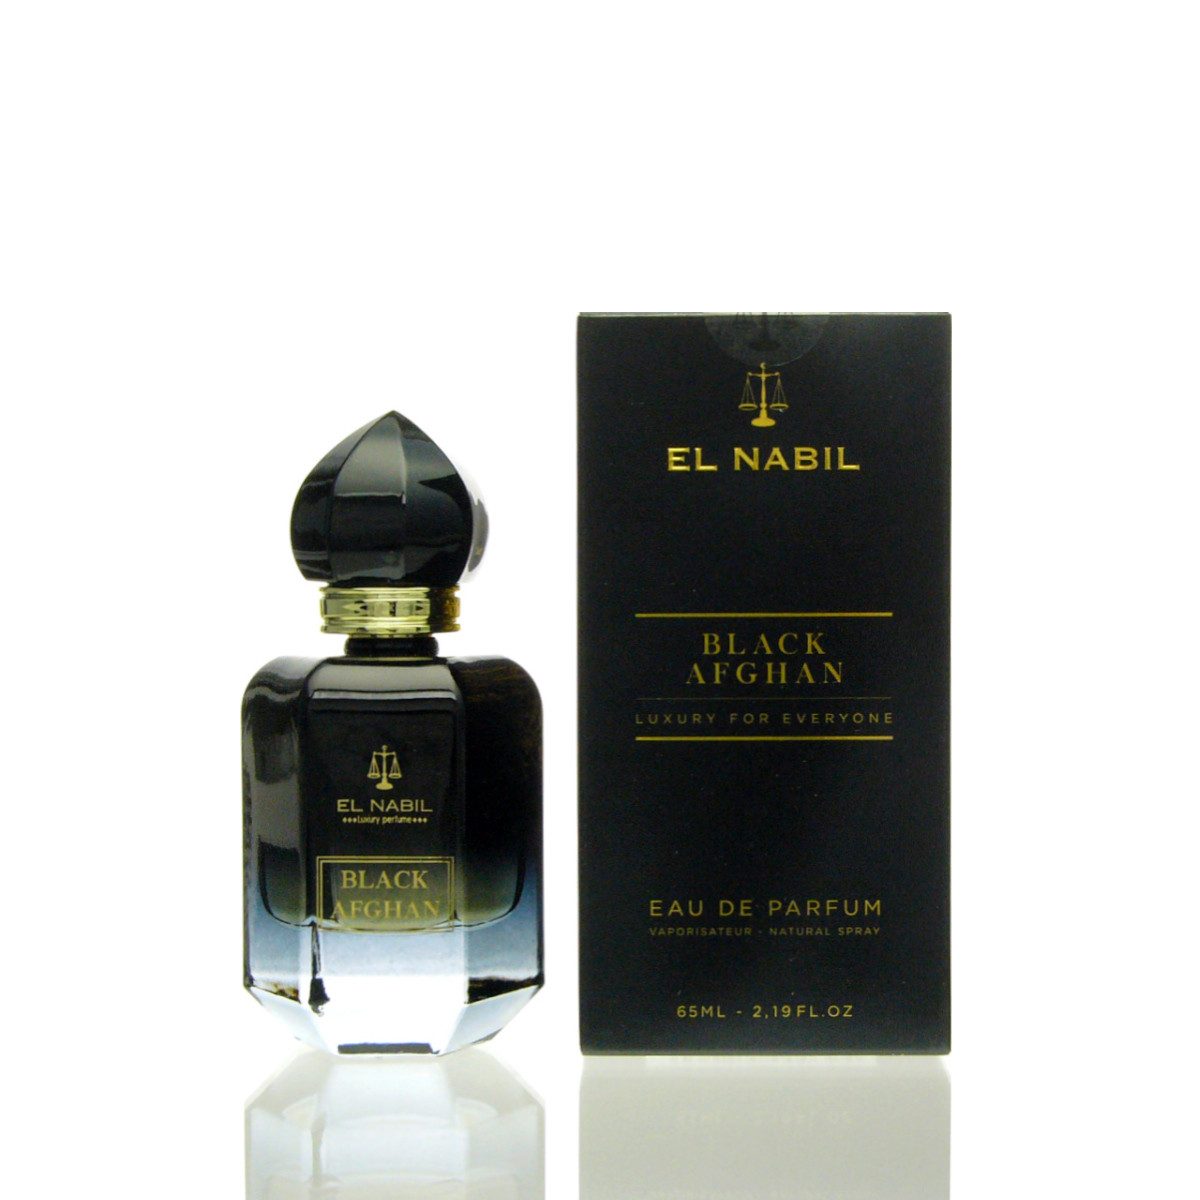 El Nabil Eau de Parfum El Nabil Black Afghan Eau de Parfum 65 ml